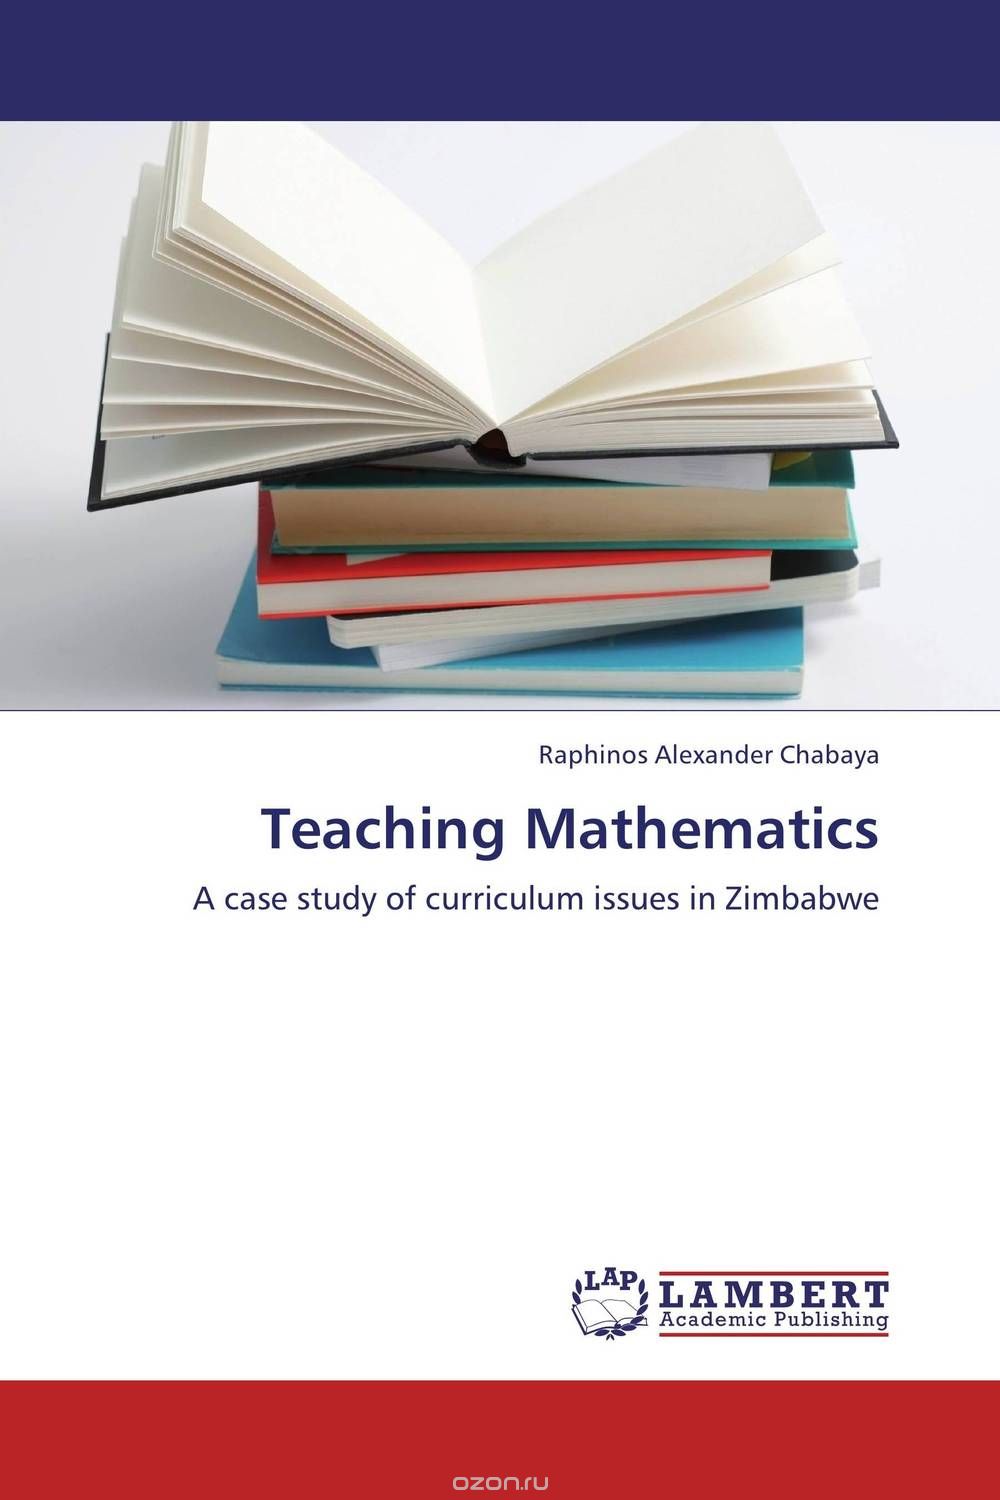 Скачать книгу "Teaching Mathematics"